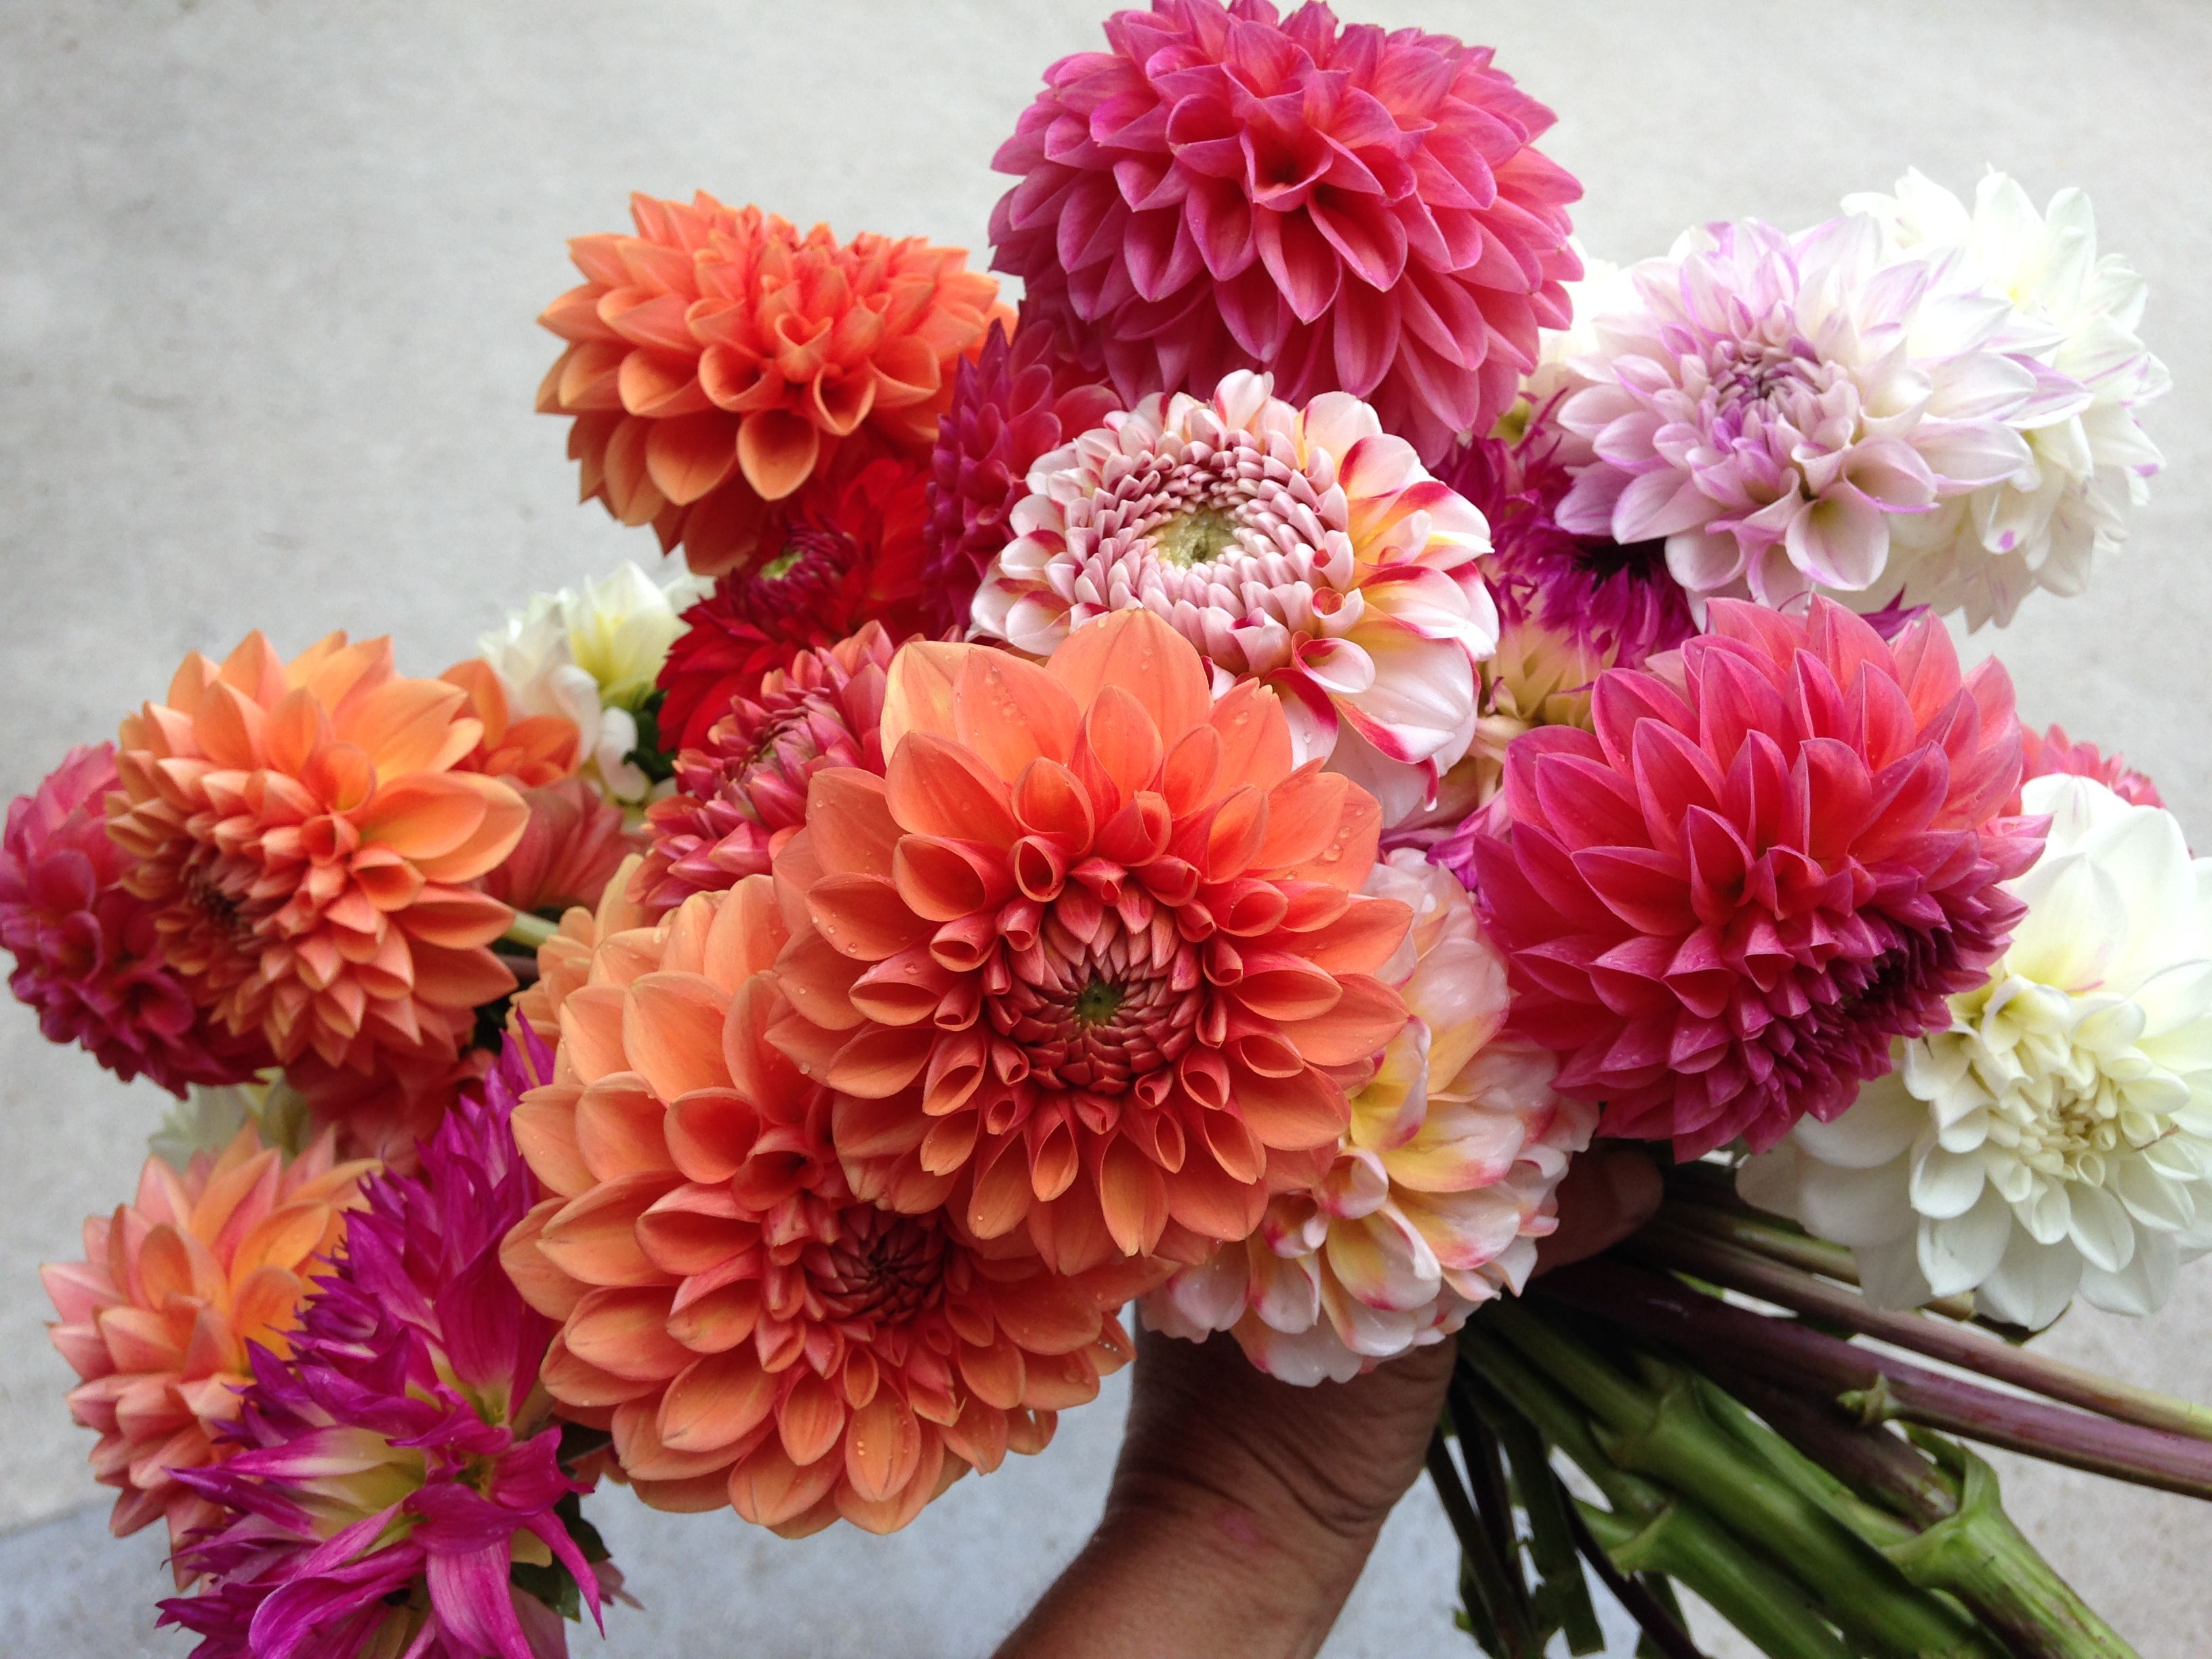 Dahlia bunch fresh picked | Dancing Farmer Flowers | Pinterest ...